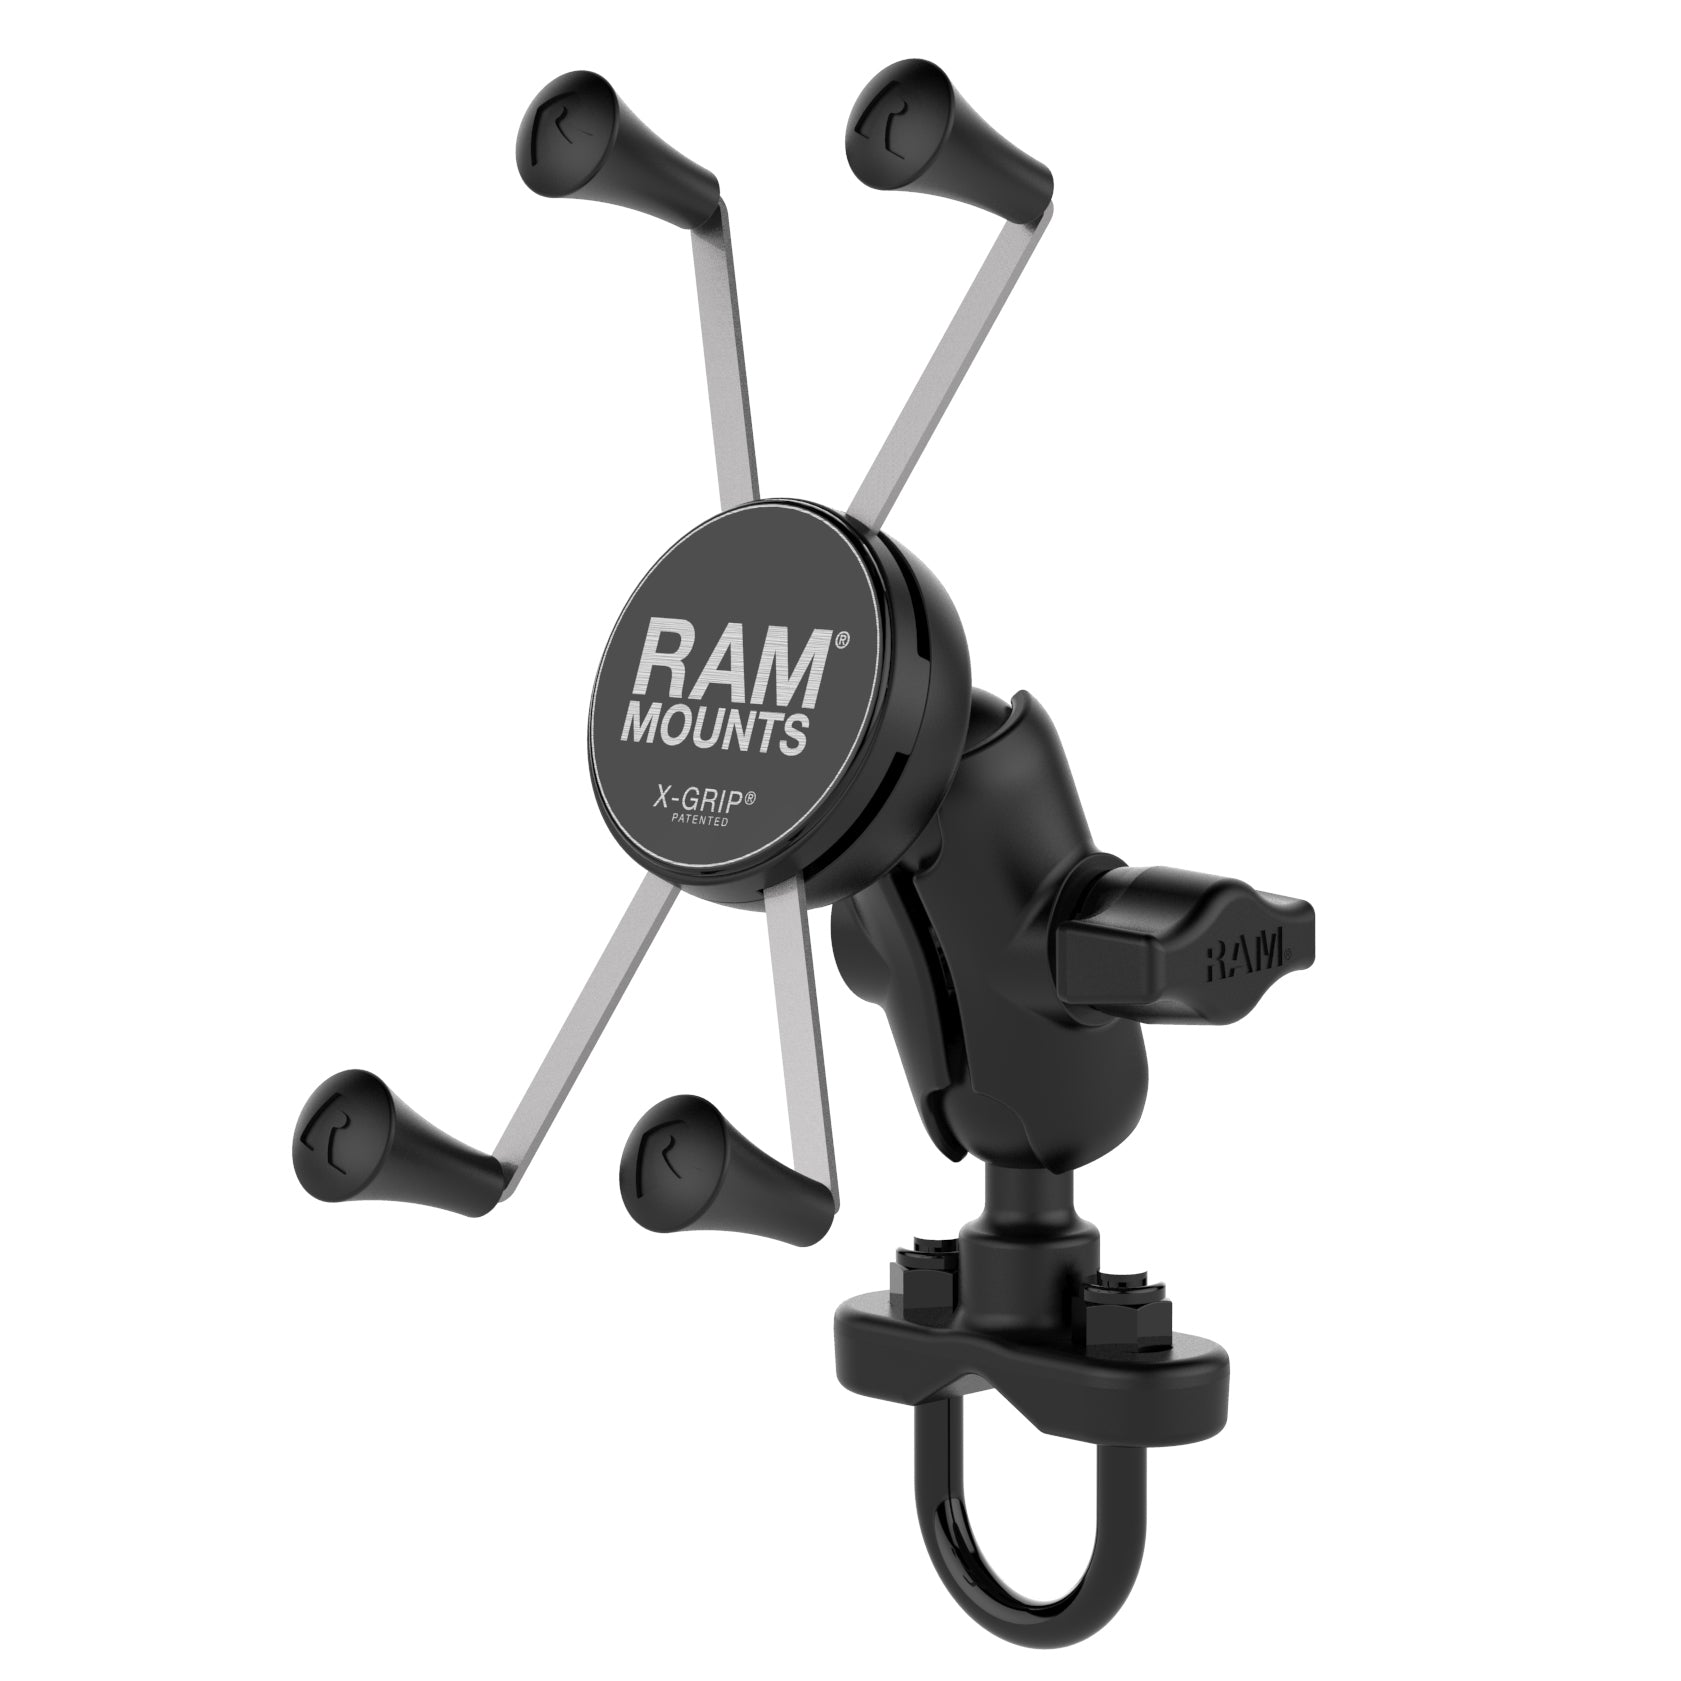 Ram Mounts X-Grip Large Phone Mount with Handlebar U-Bolt Base